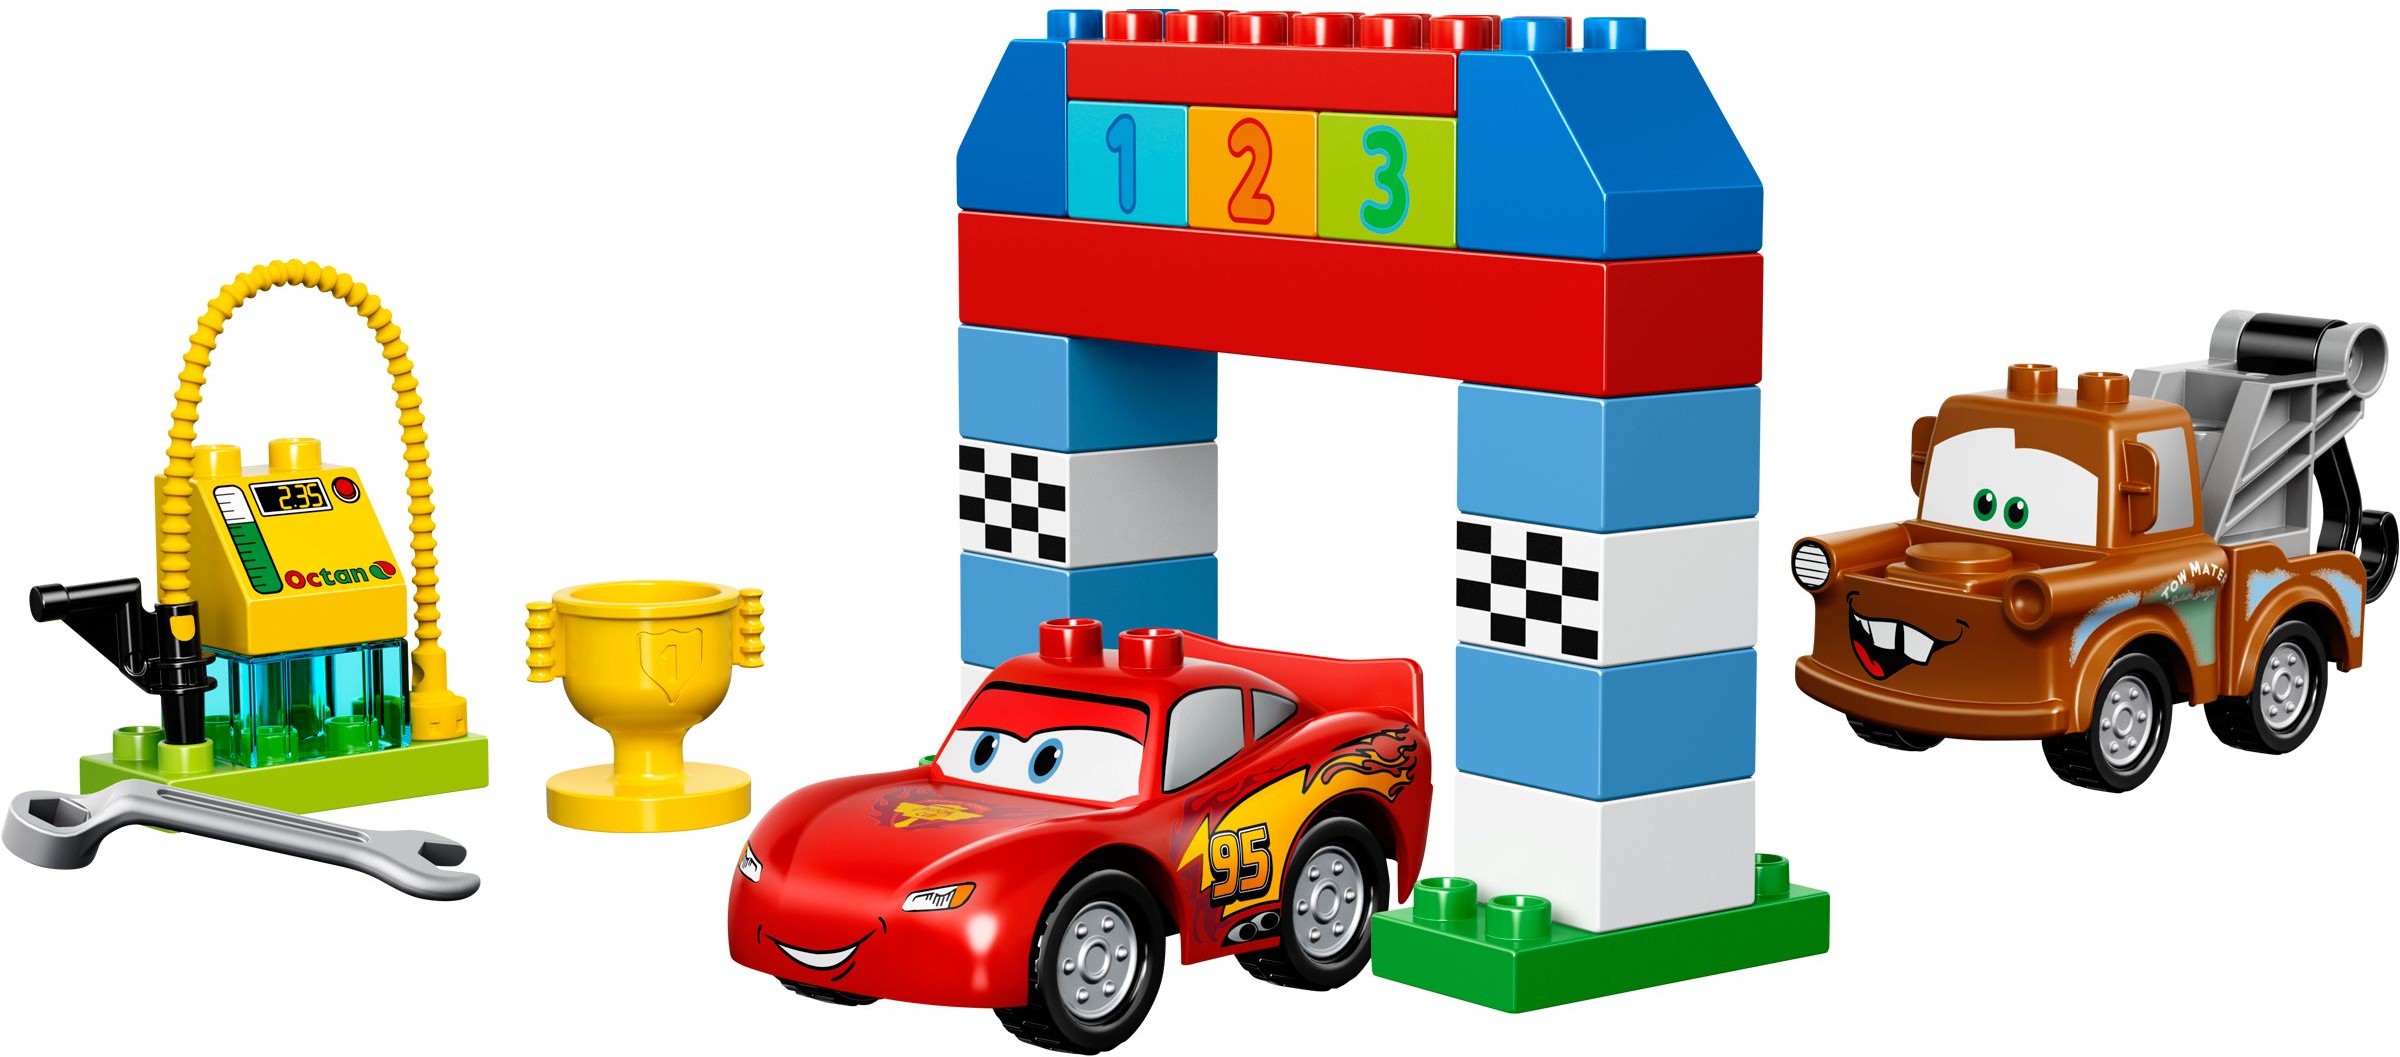 handkerchief He cassette Duplo | Cars | Brickset: LEGO set guide and database